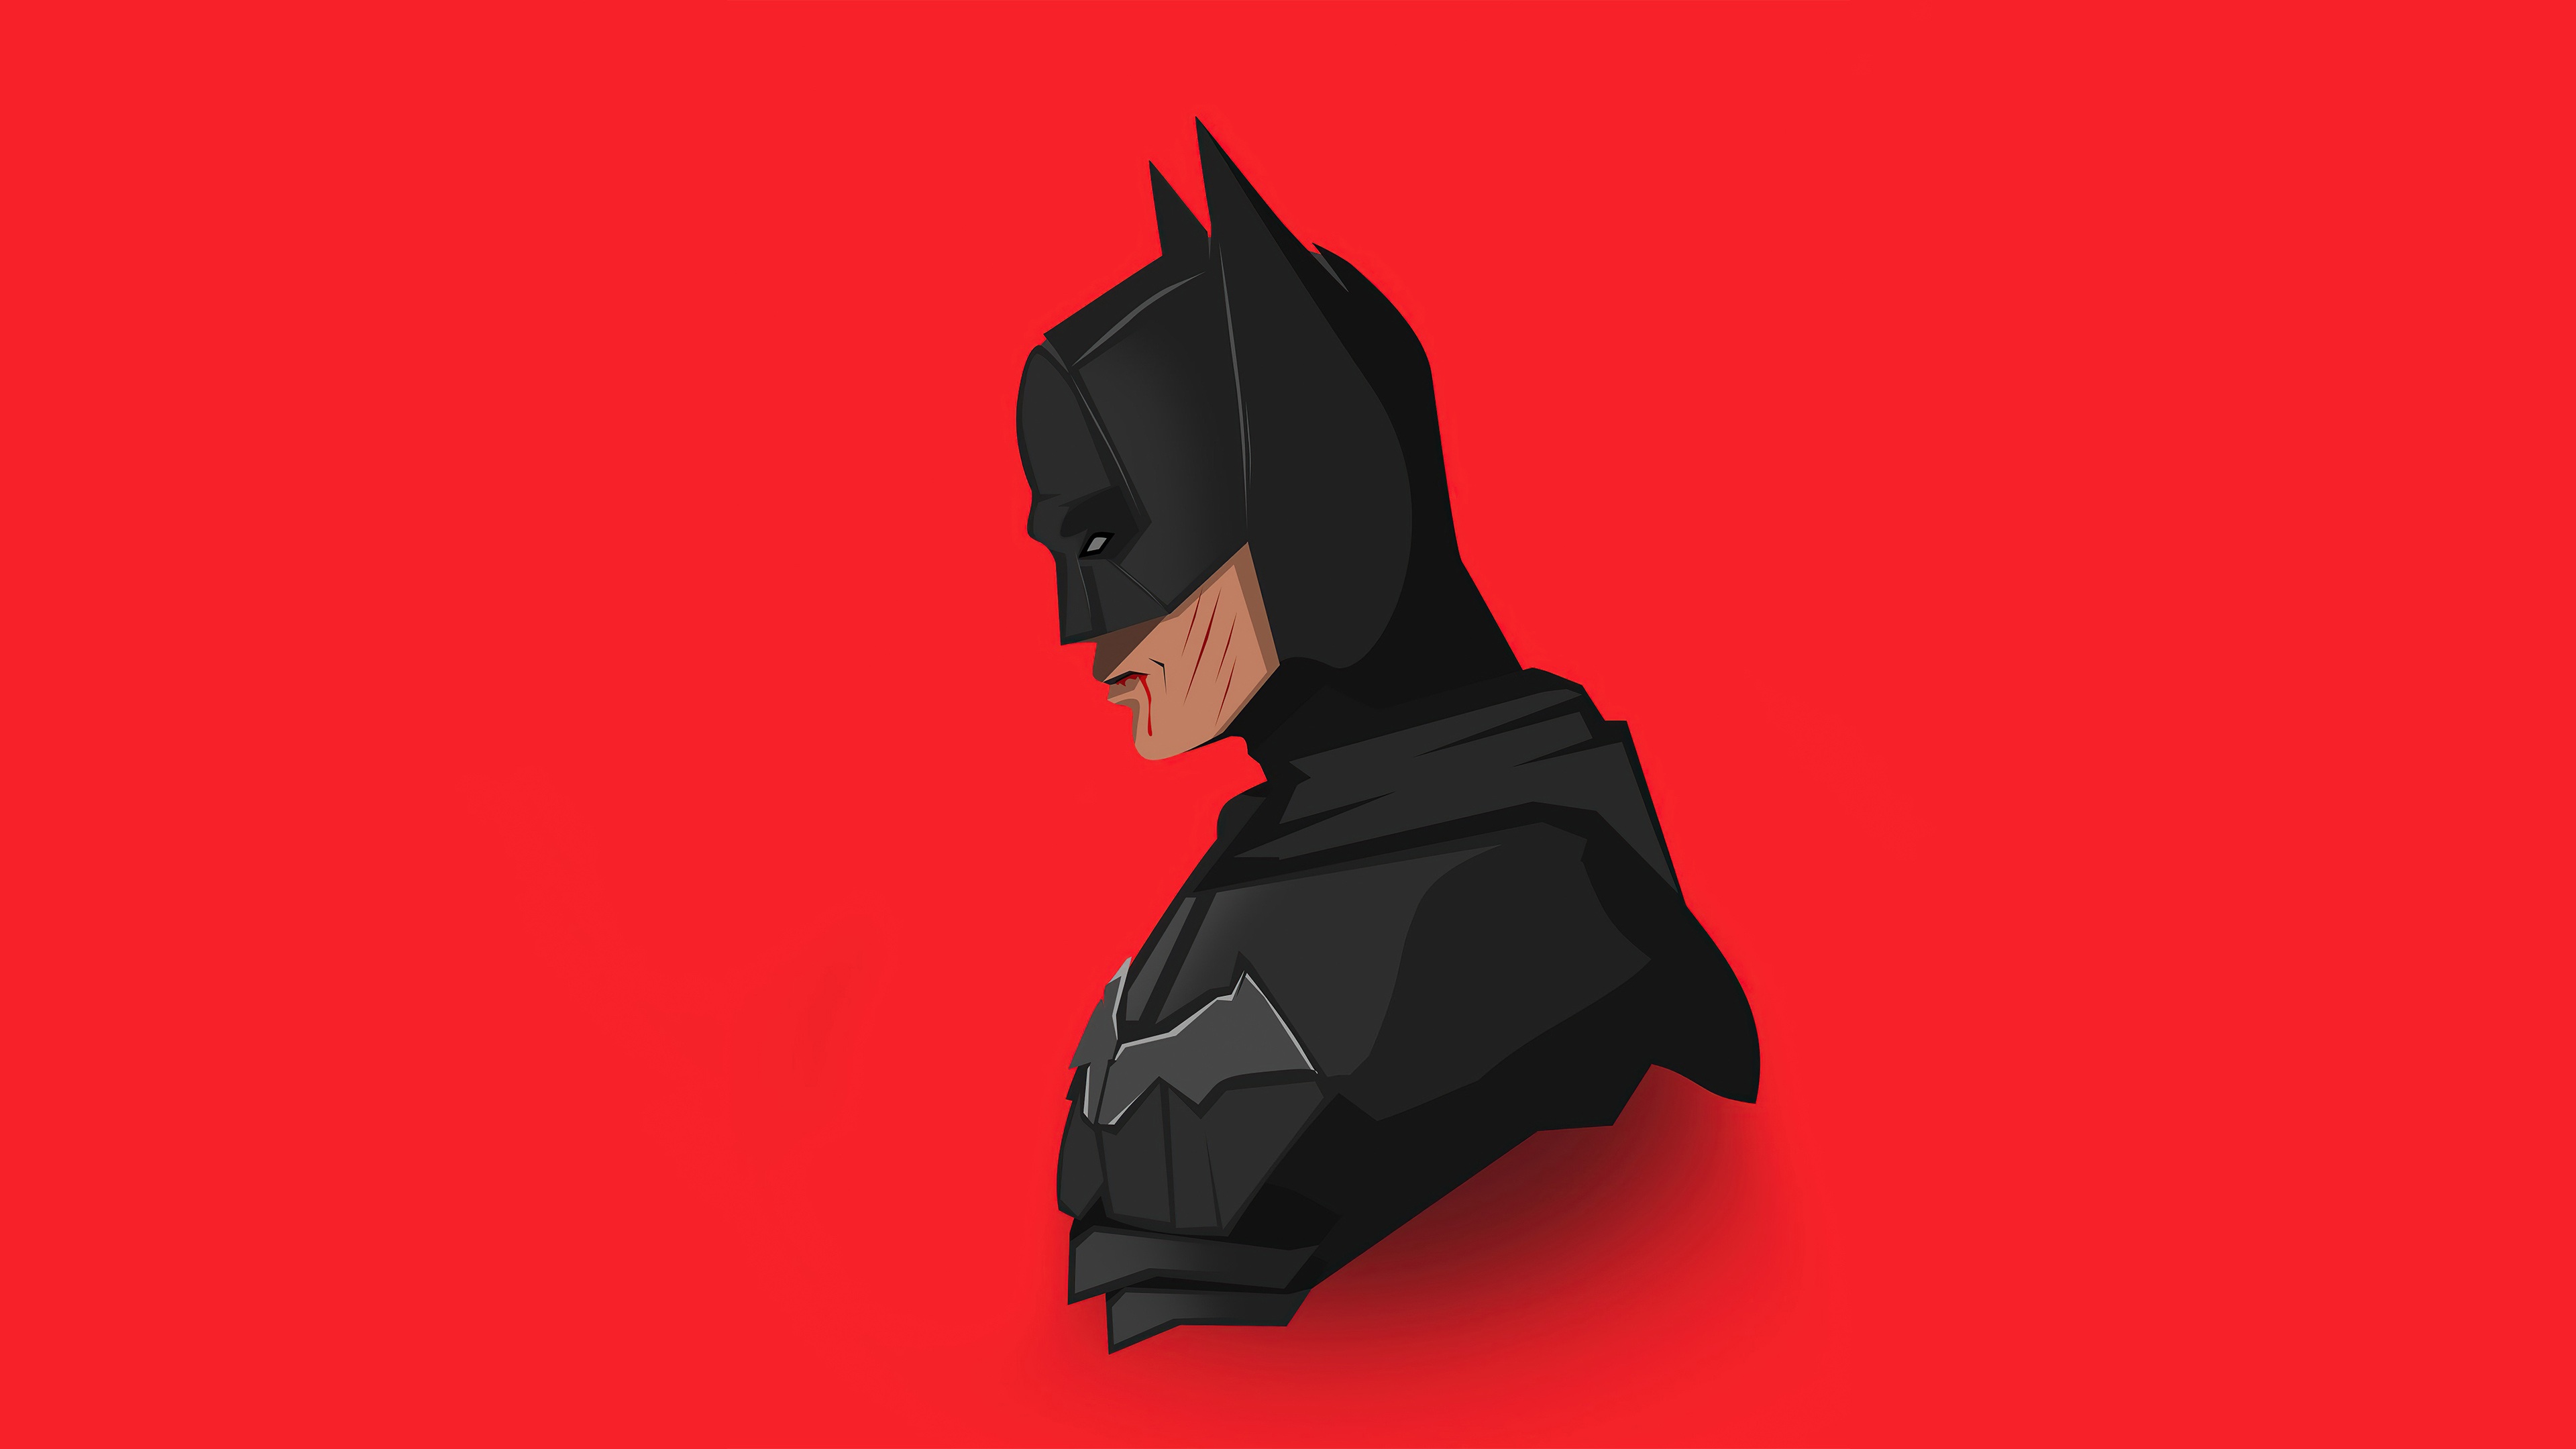 The Batman 4k Wallpapers - Top Ultra 4k The Batman Backgrounds